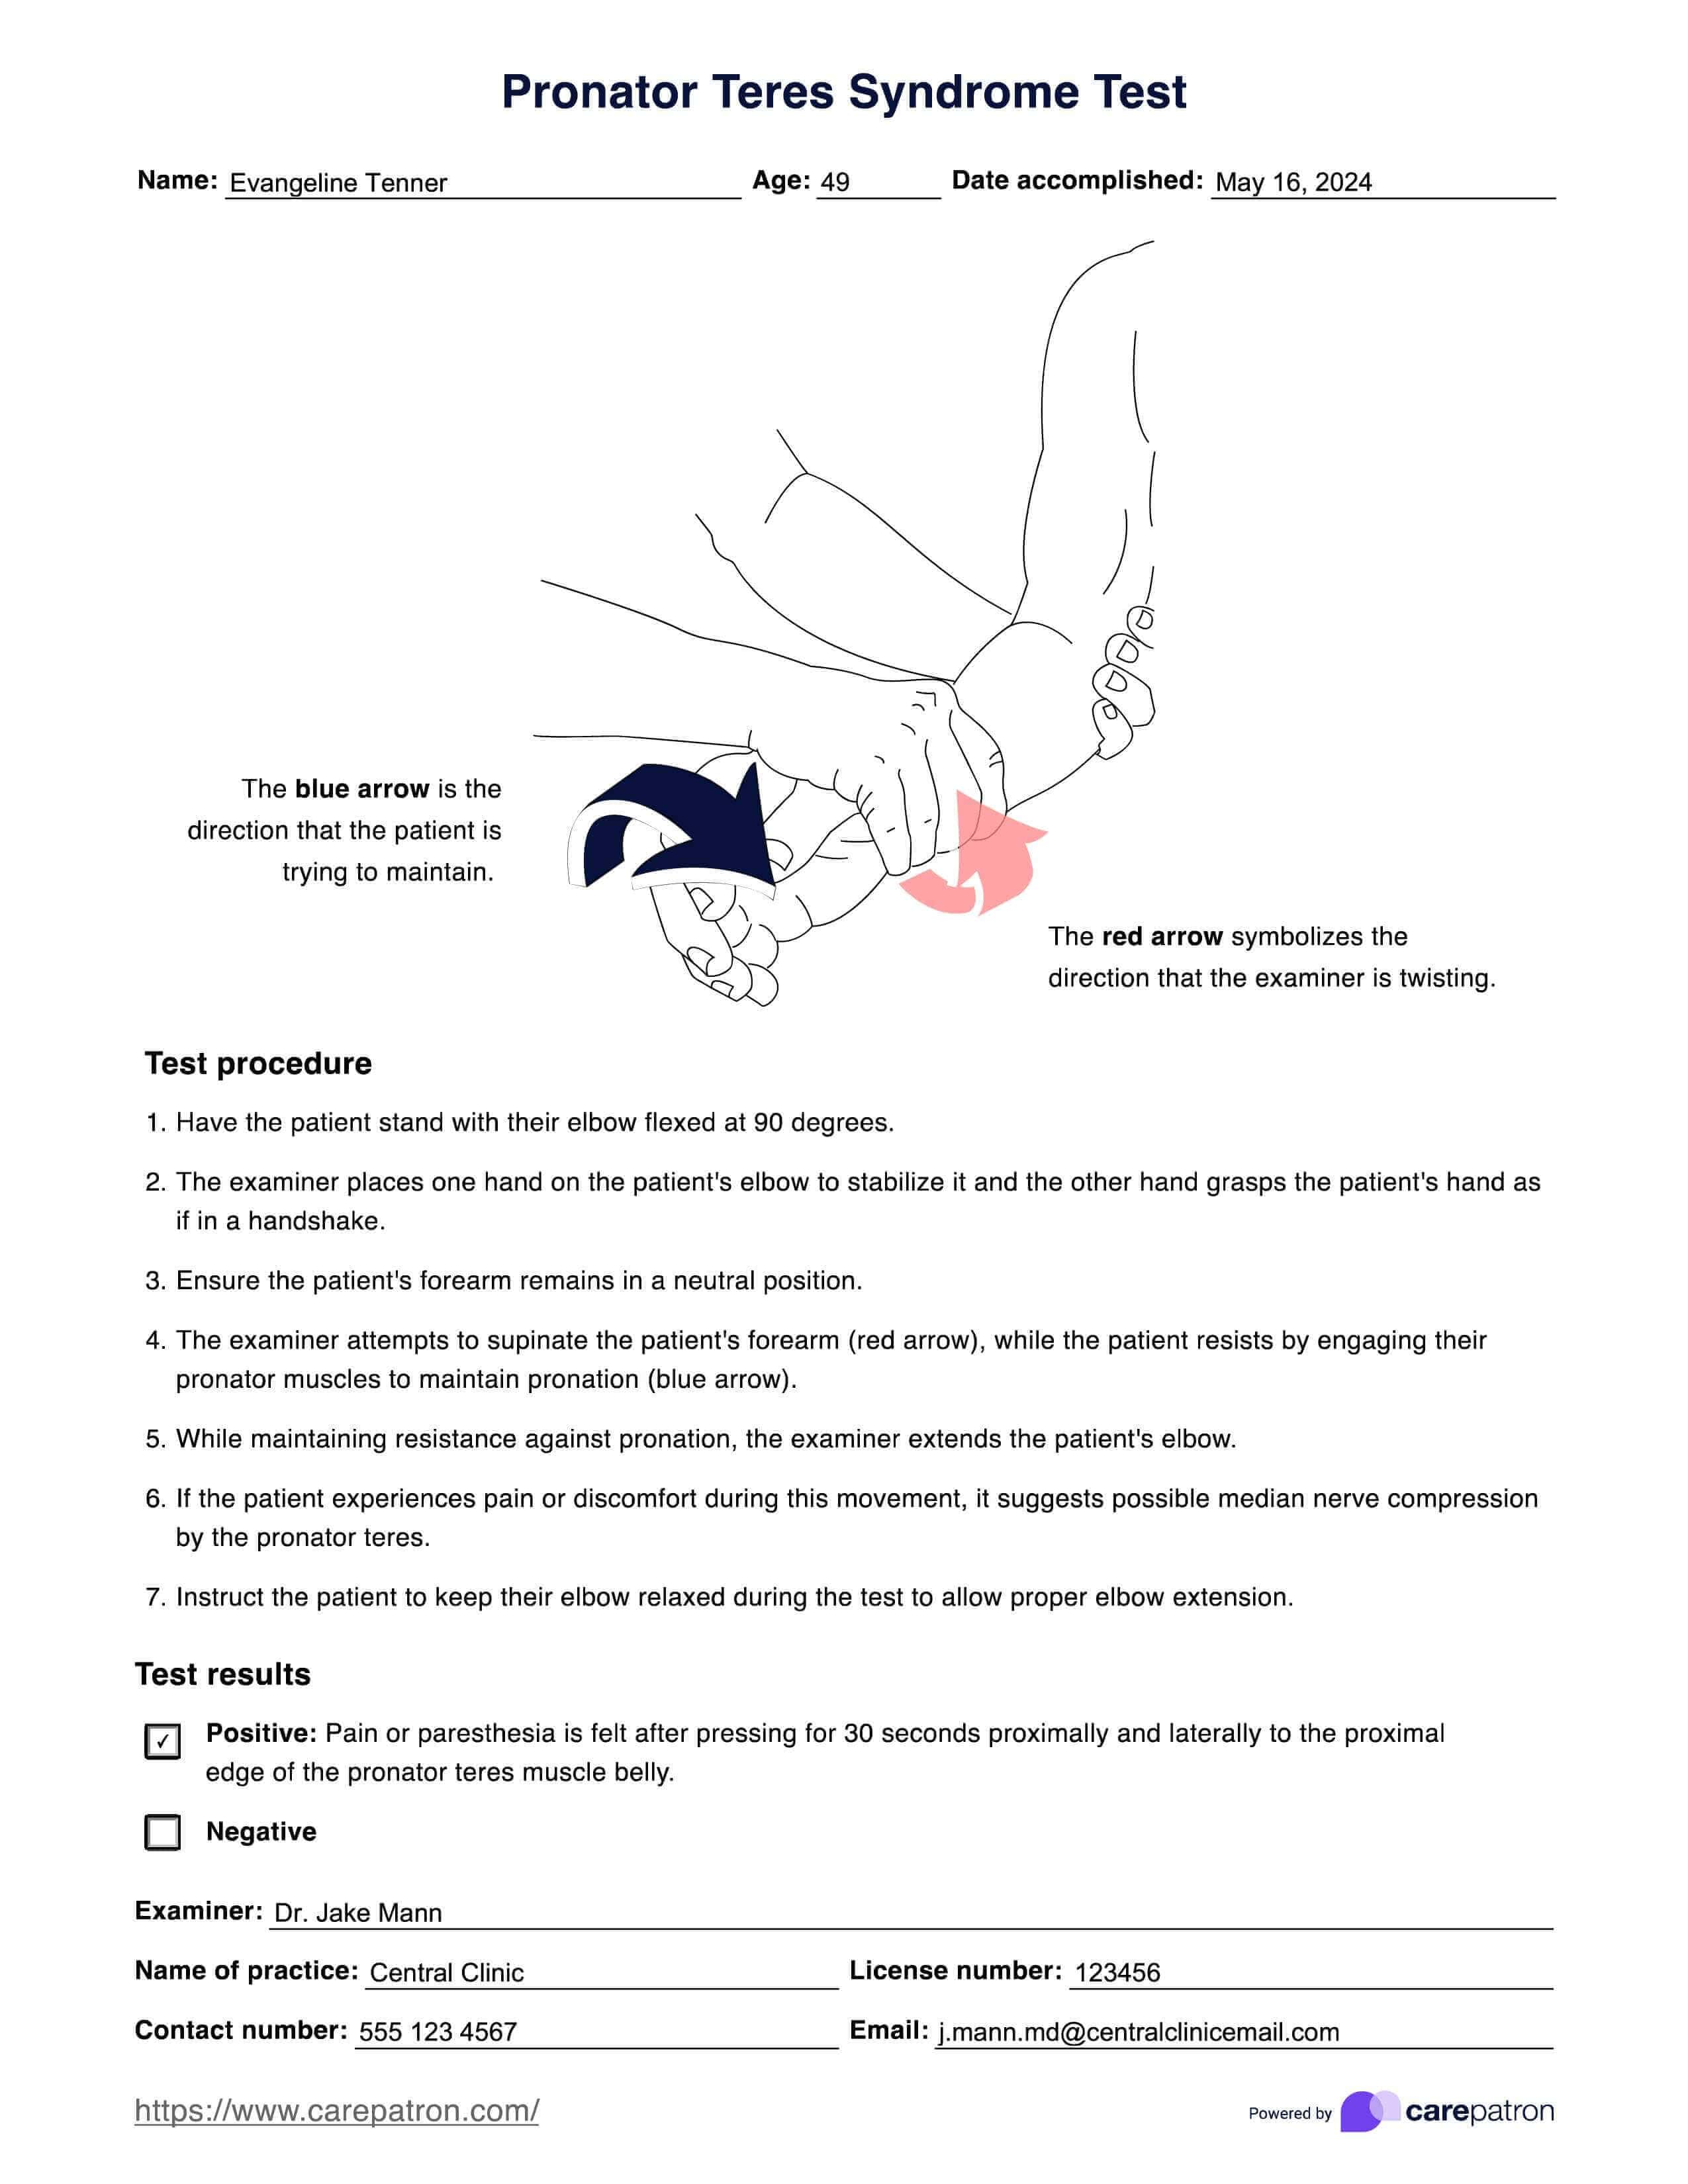 Pronator Teres Syndrome Test PDF Example